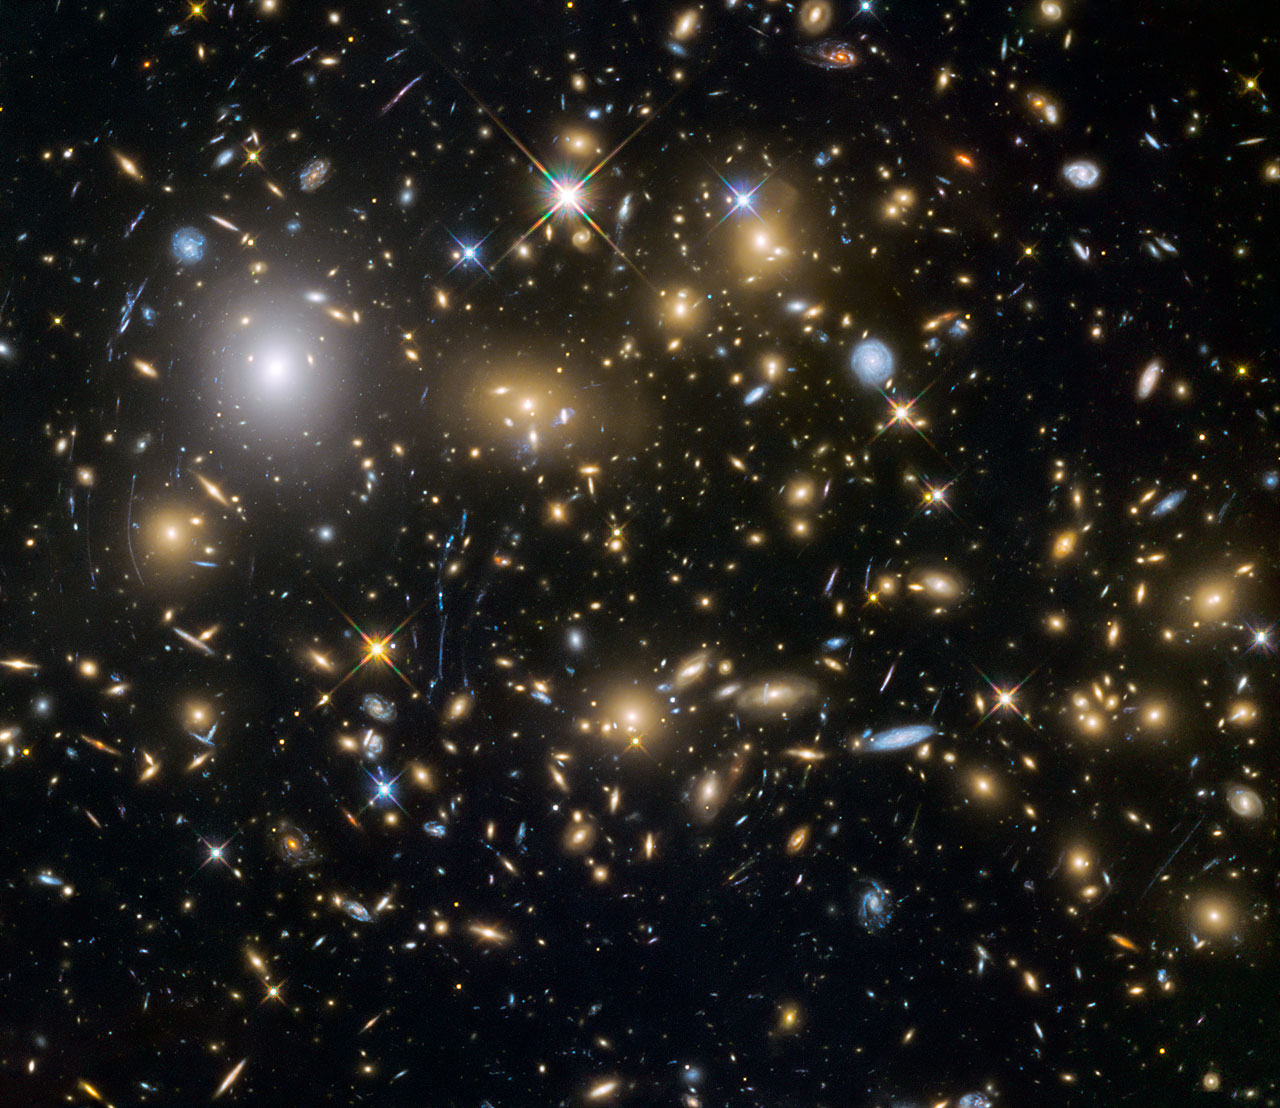 Wider view showing galaxy cluster MACSJ0717.5+3745. Image Credit: NASA/ESA/HST Frontier Fields team (STScI)